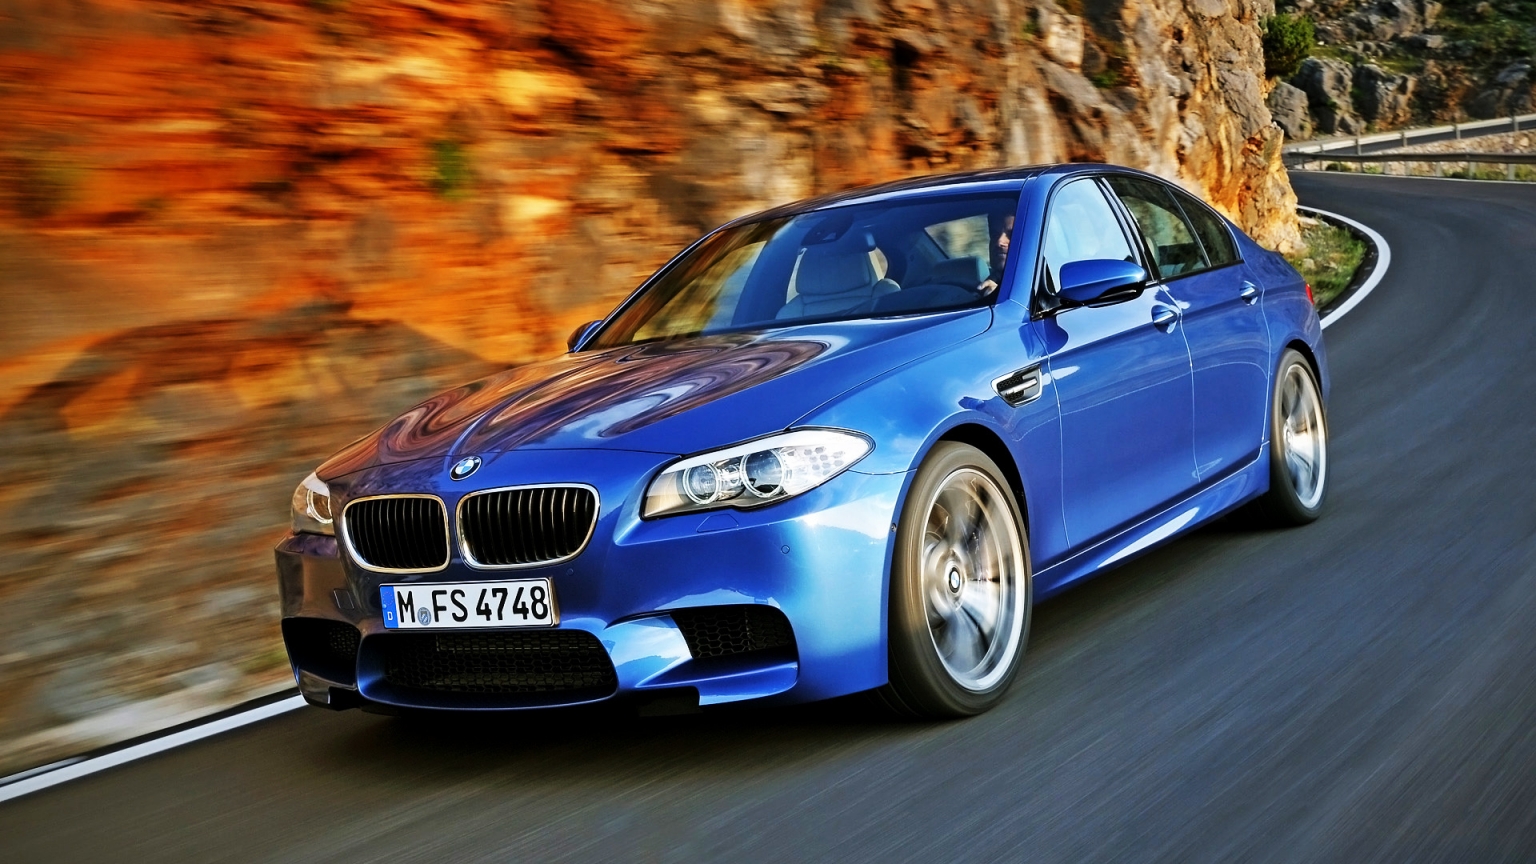 2012 BMW M5 for 1536 x 864 HDTV resolution